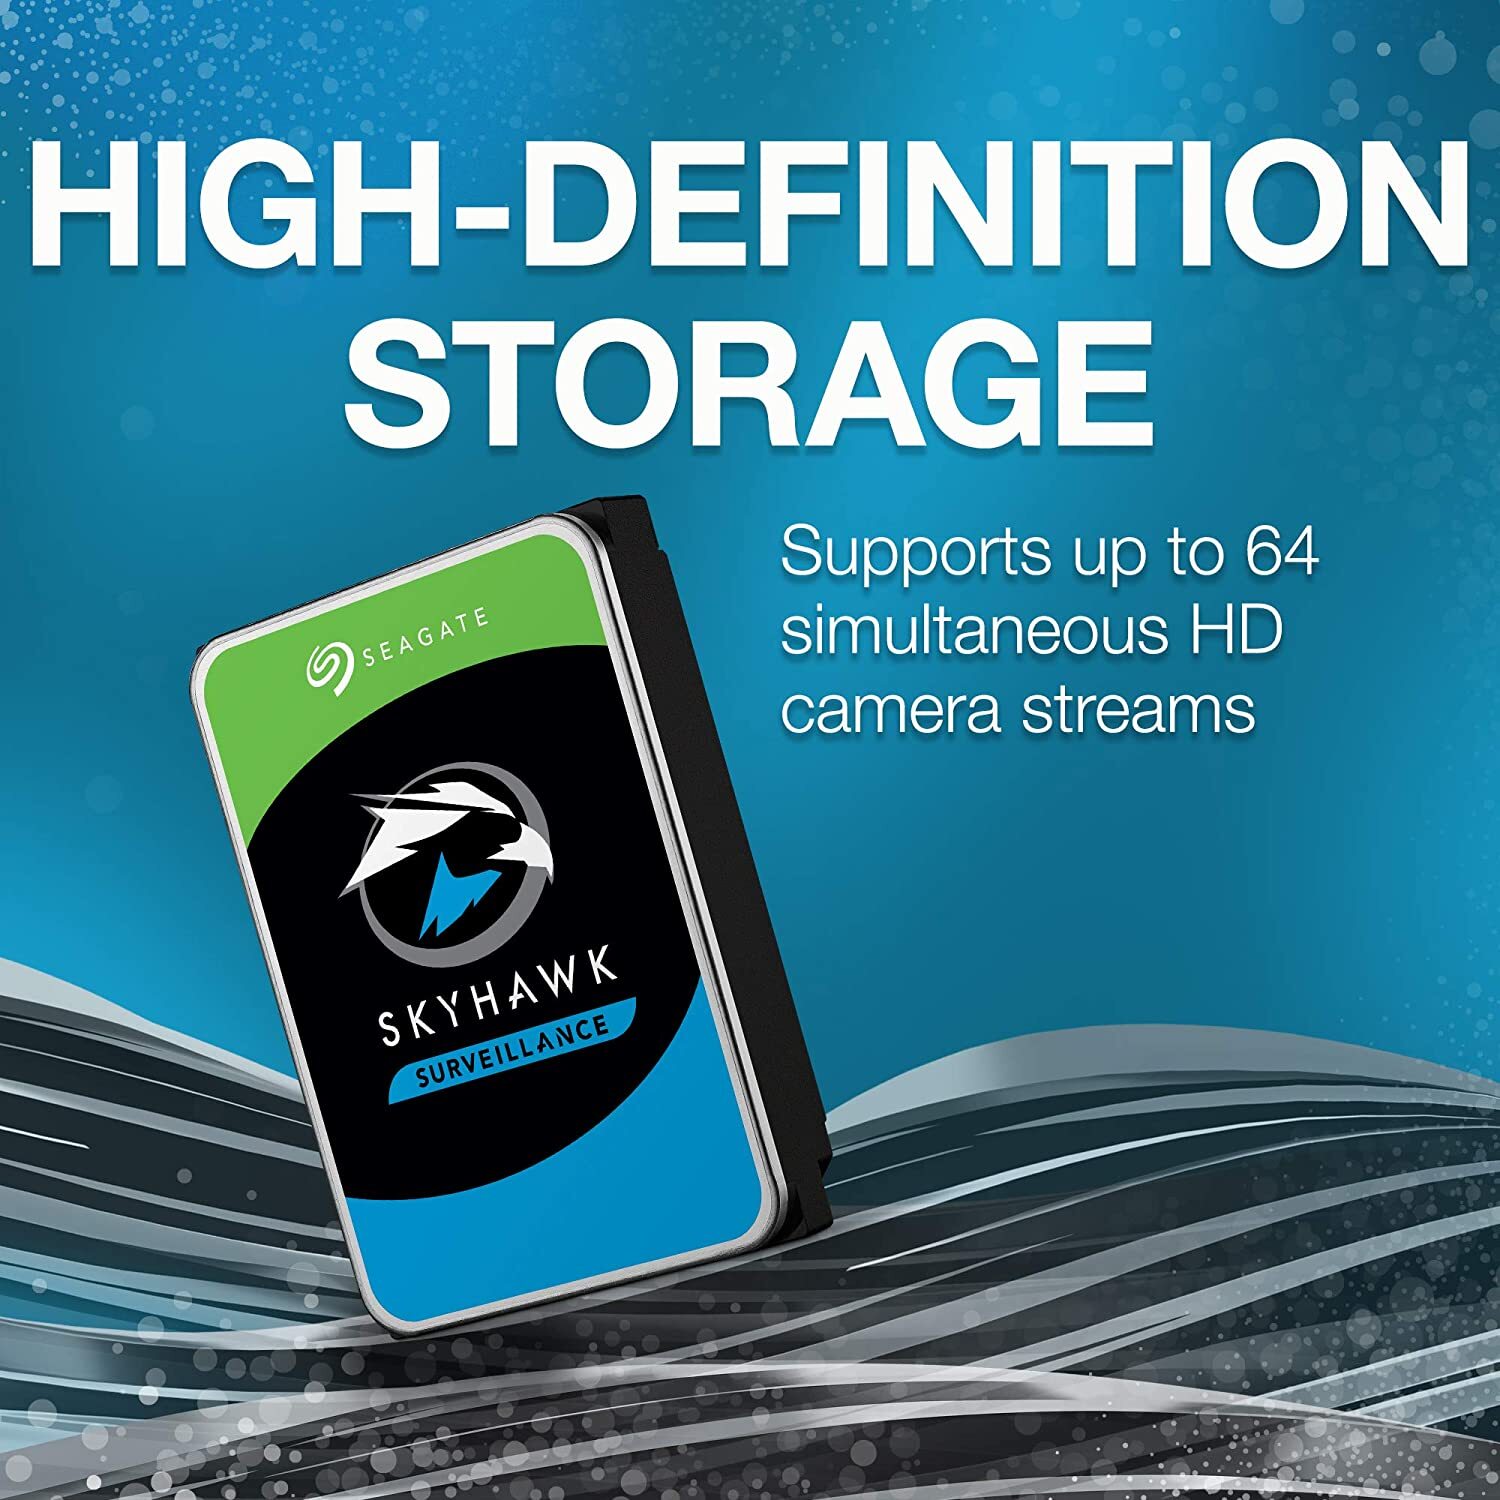 Seagate SkyHawk 2 TB Surveillance Internal Hard Drive HDD – 3.5 Inch SATA 6 Gb/s 64 MB Cache for DVR NVR Security Camera System (ST2000VX008)